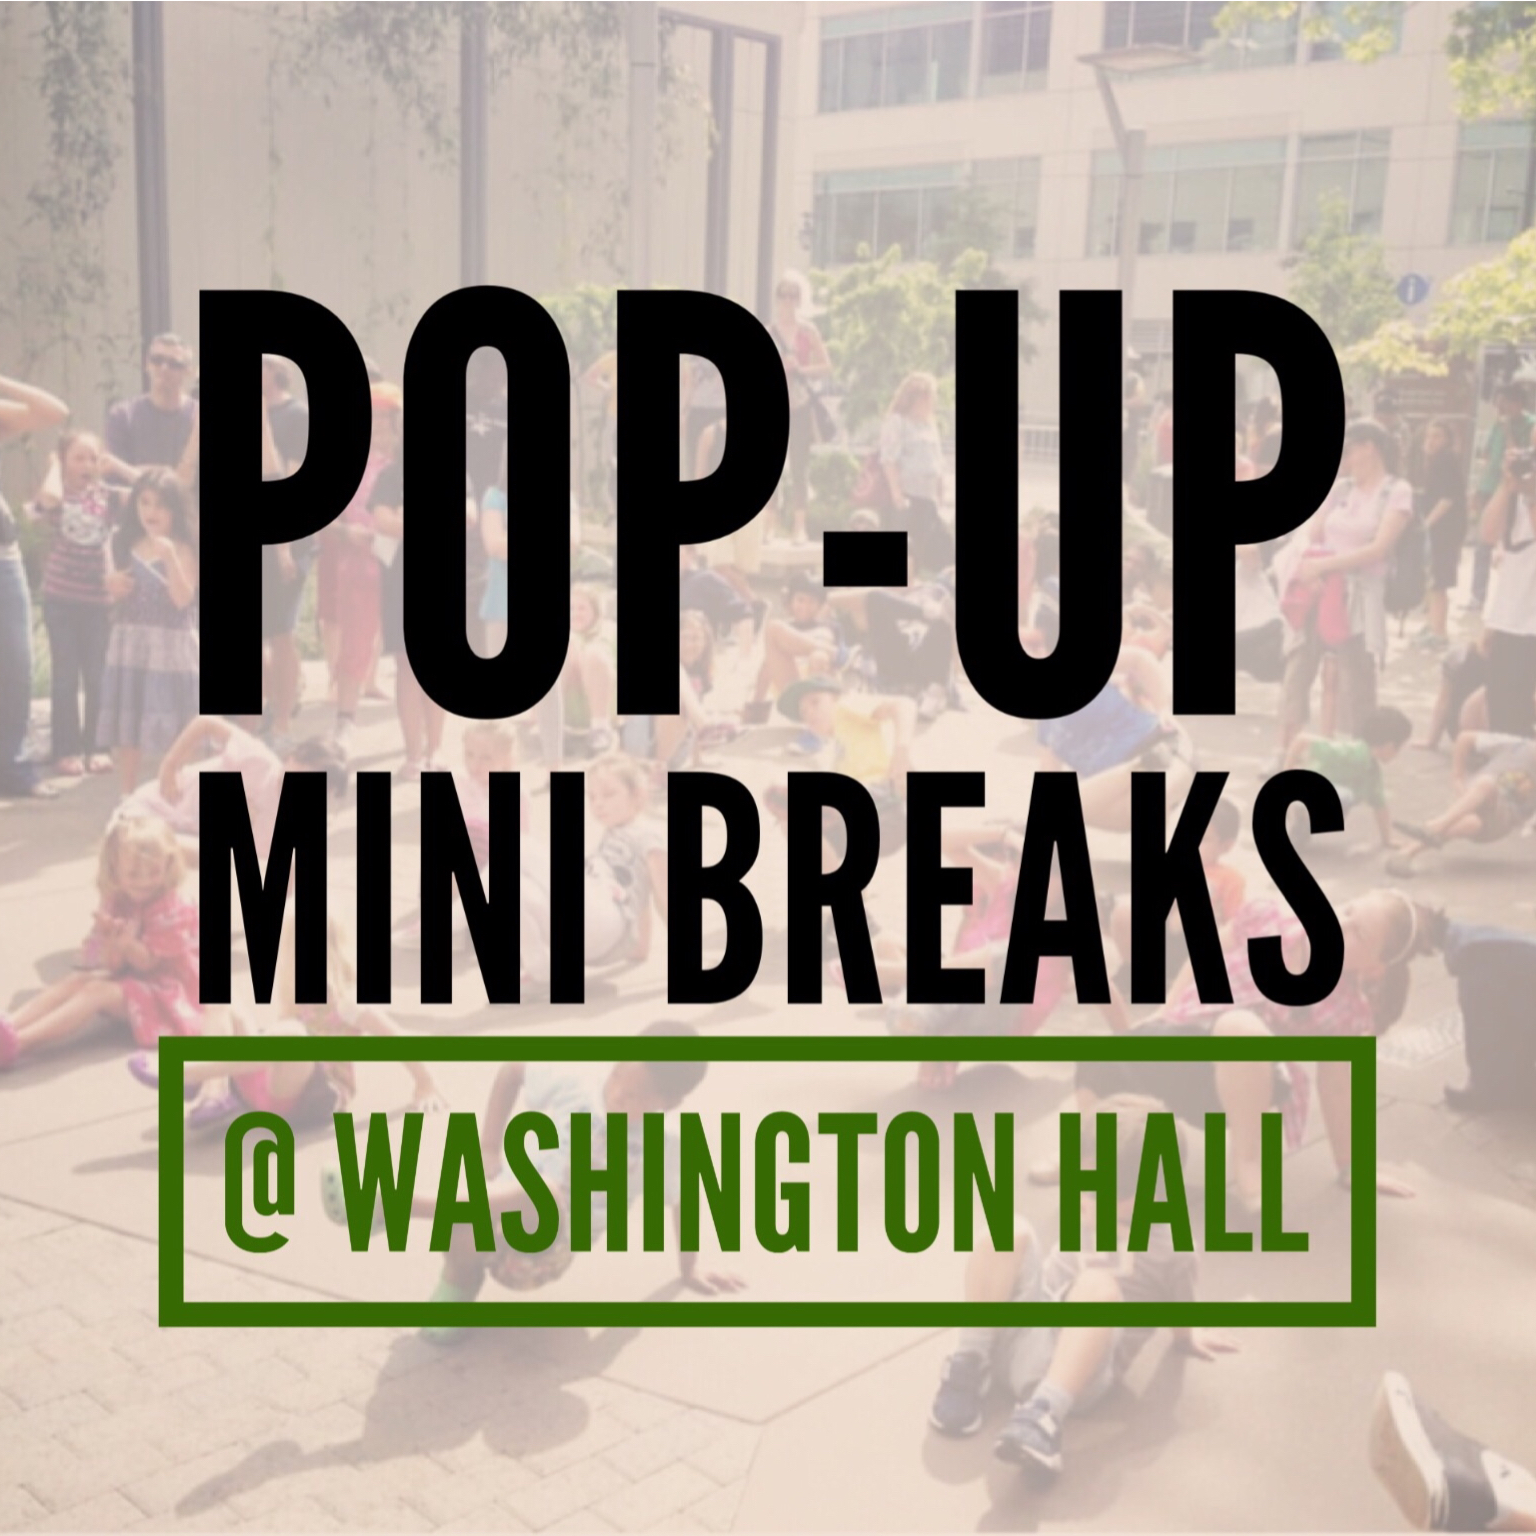 “Pop-up Mini BREAKS” @ Washington Hall (Seattle)